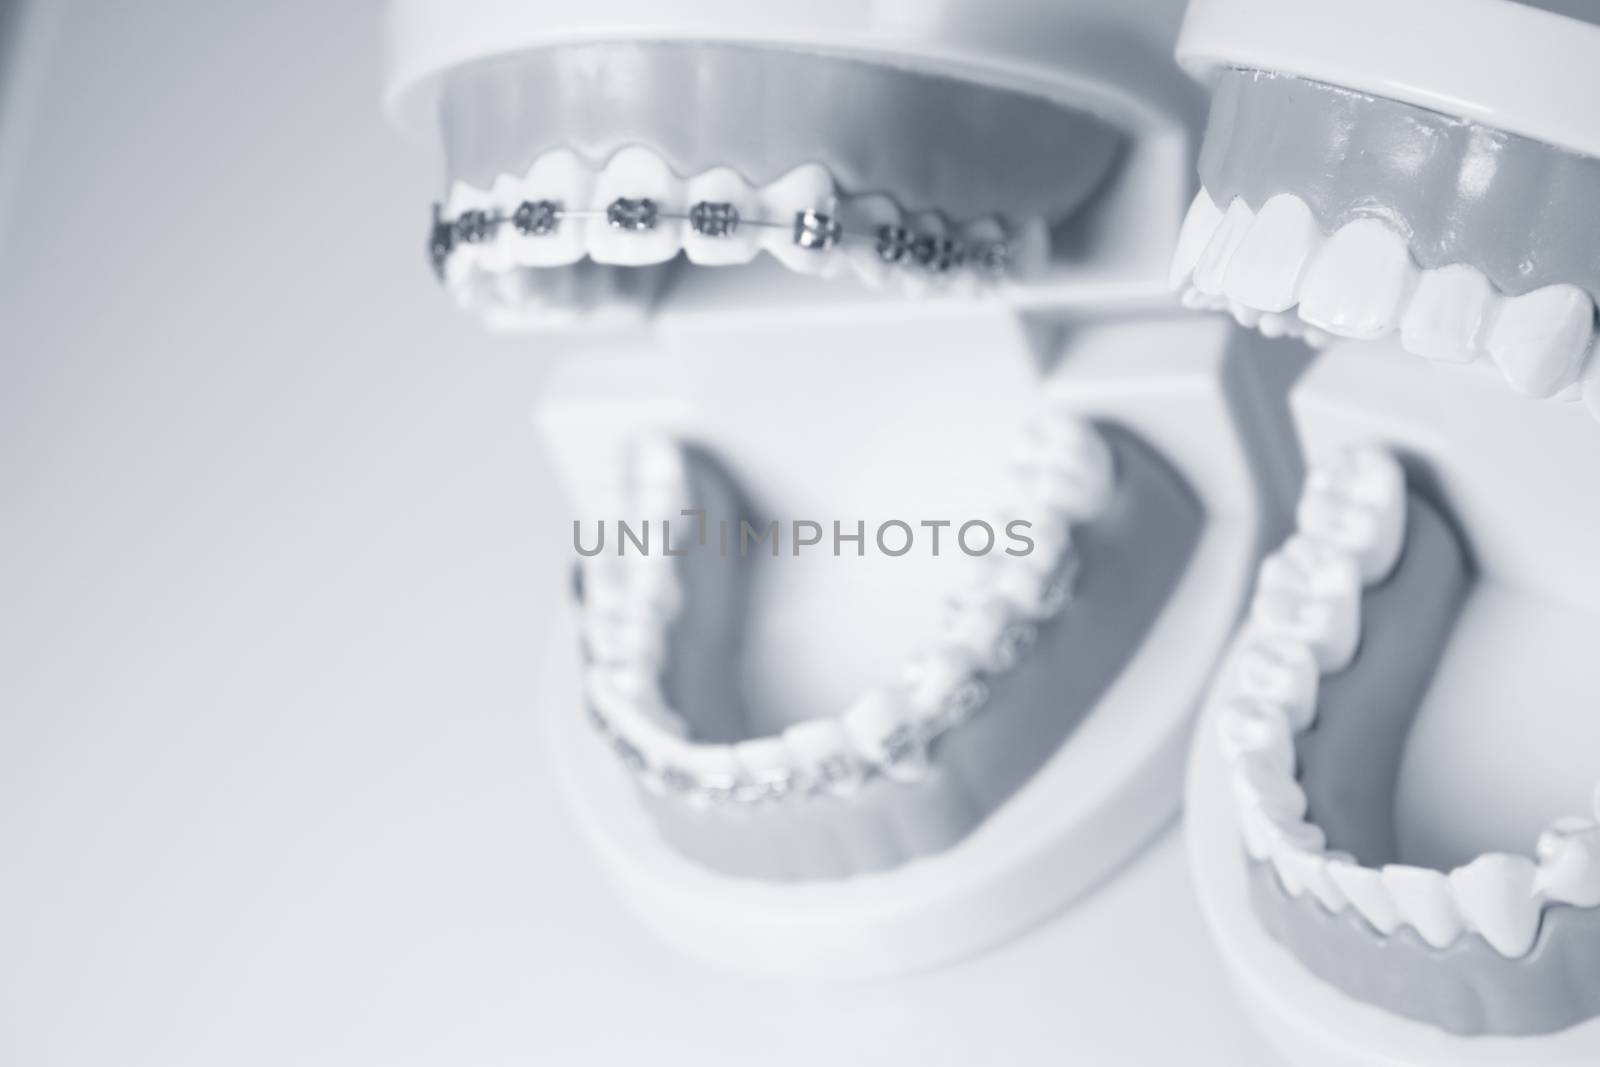 Model denture with metal orthodontics. No people